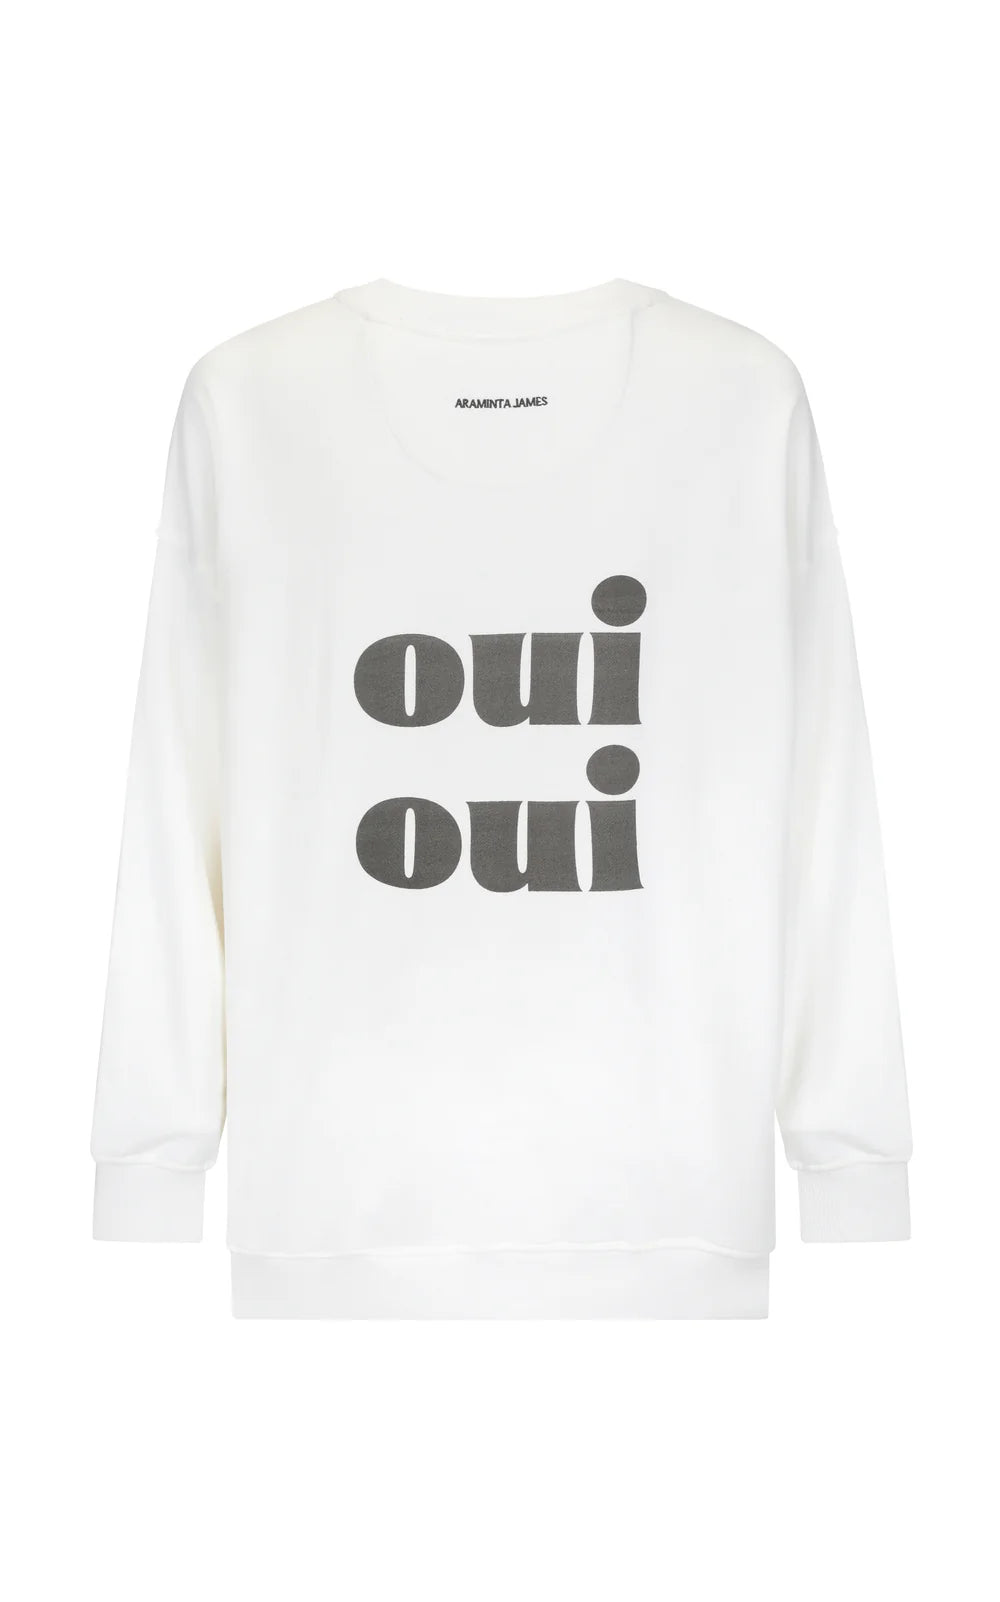 Oui sweatshirt, white